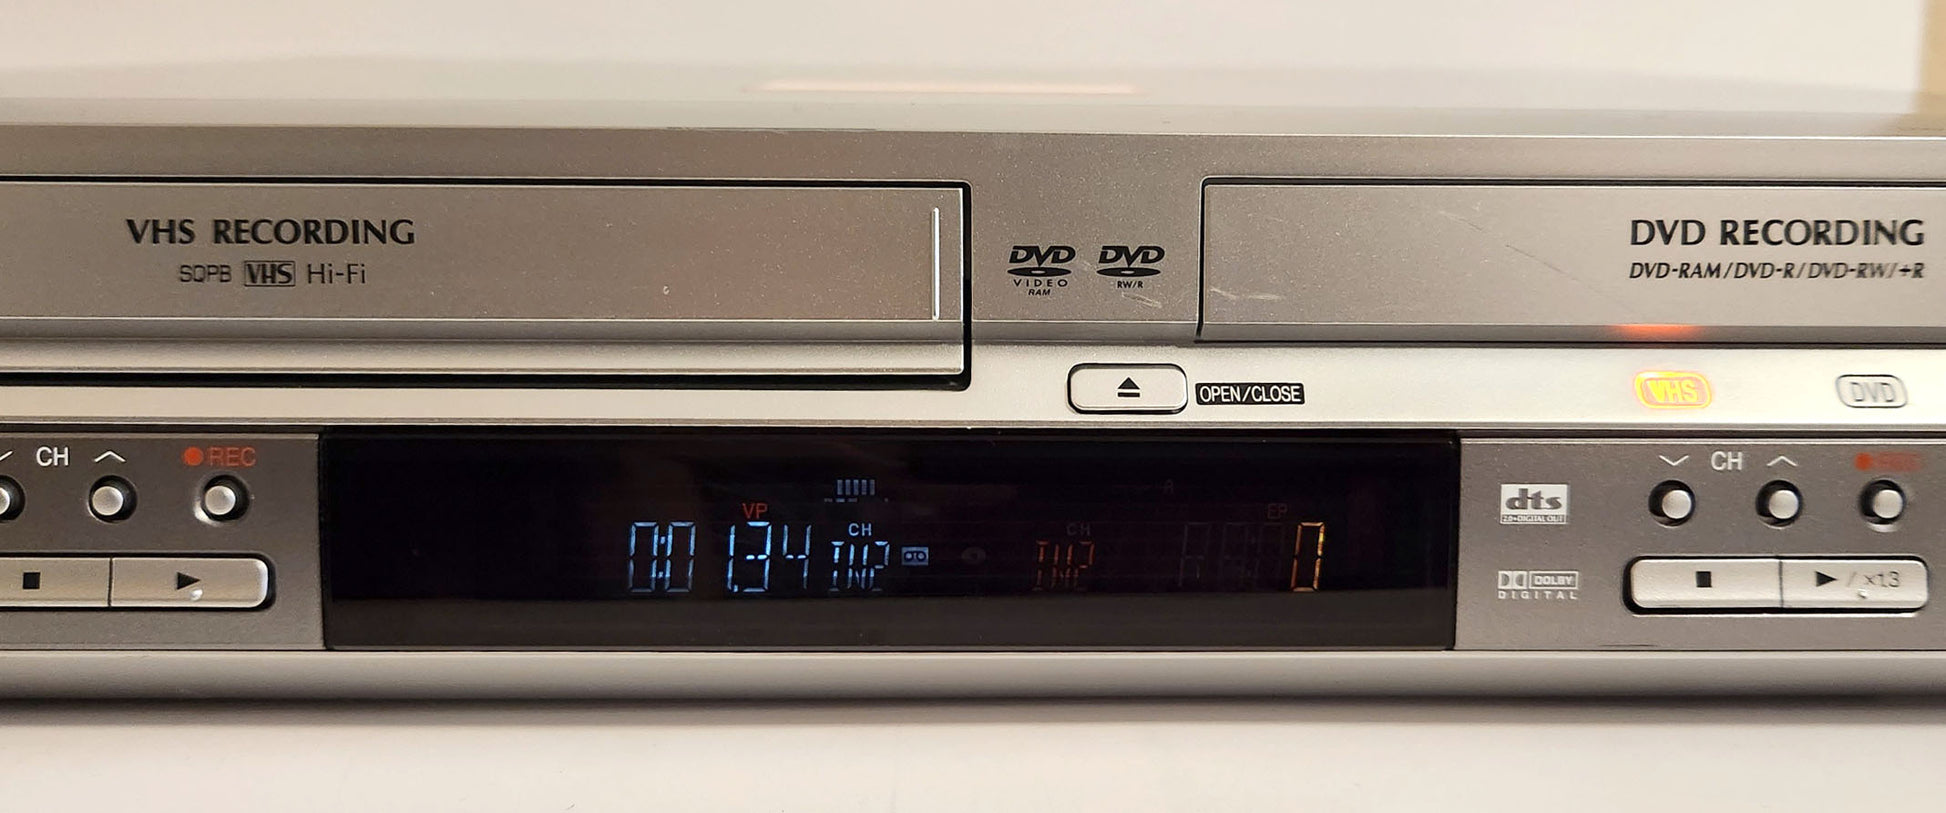 Panasonic DMR-ES30V VCR/DVD Recorder Combo - Display